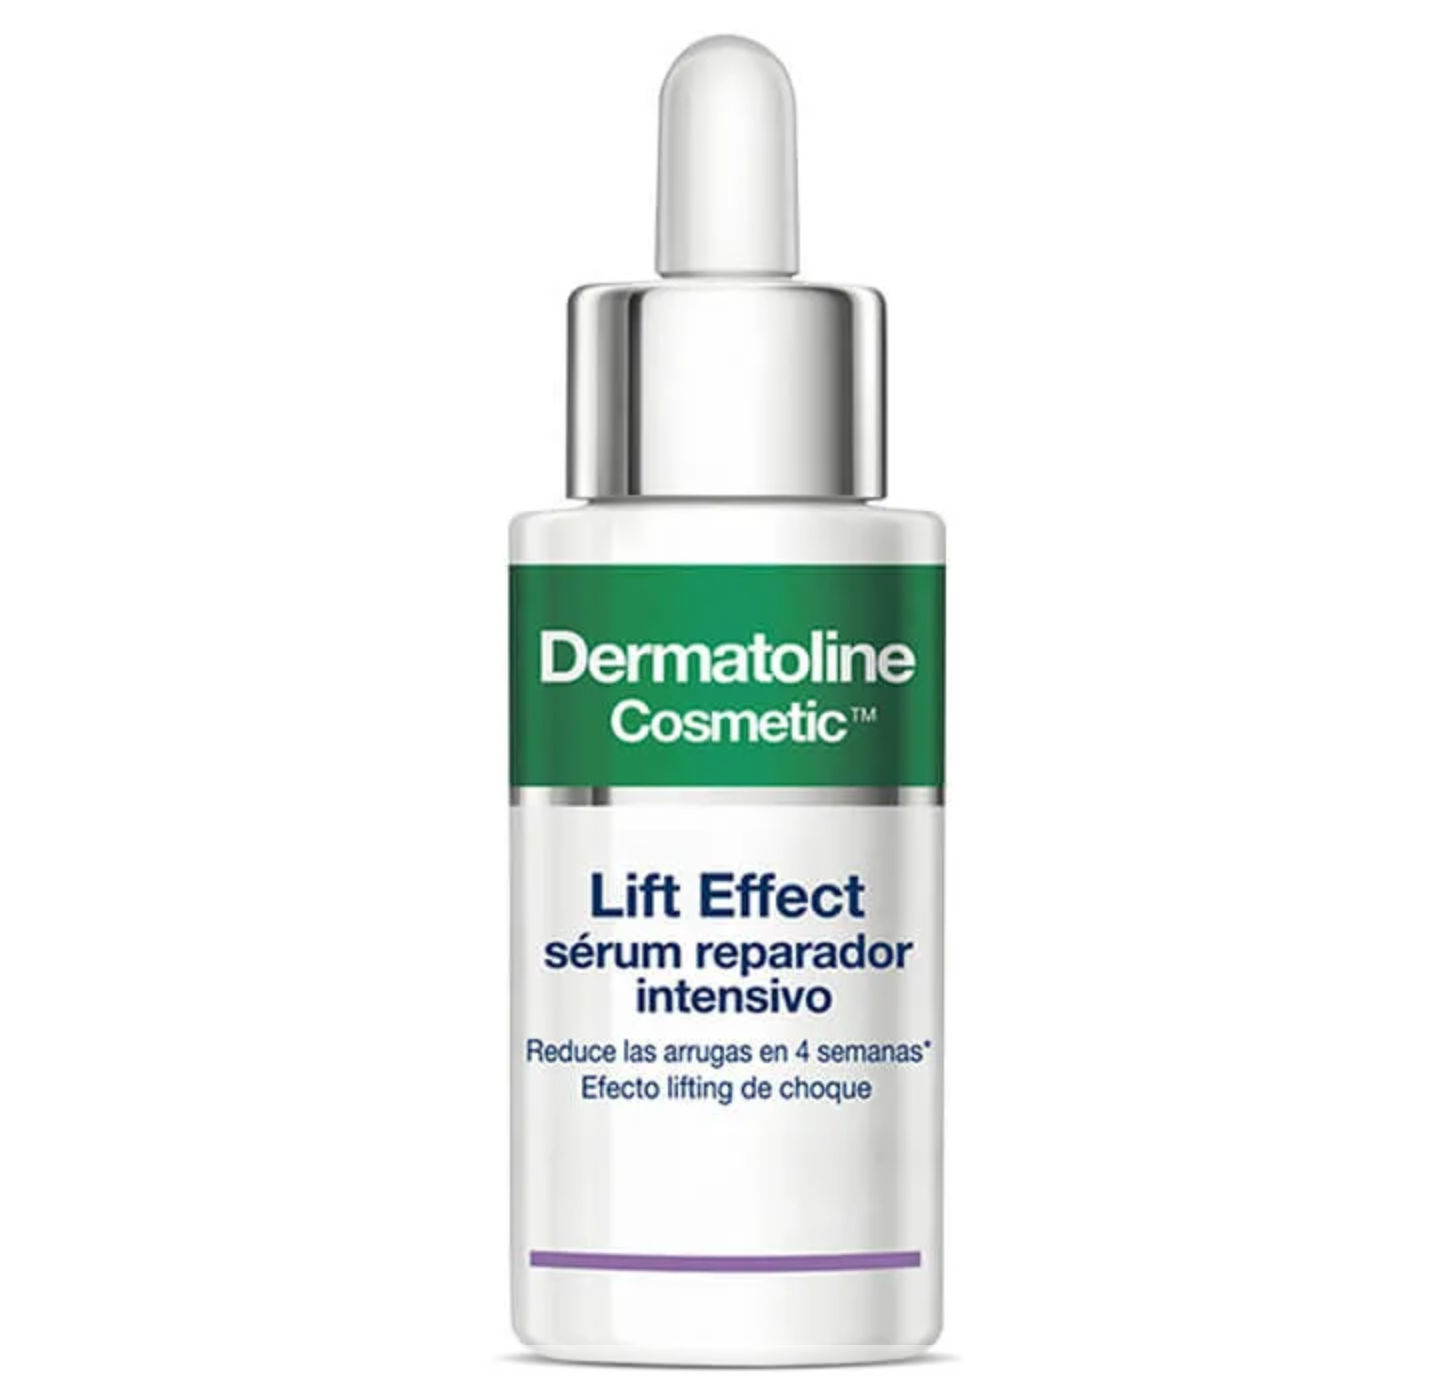 Dermatoline Lift Effect Siero Intensivo Riparatore 30ml - Jasmine Parfums- [ean]